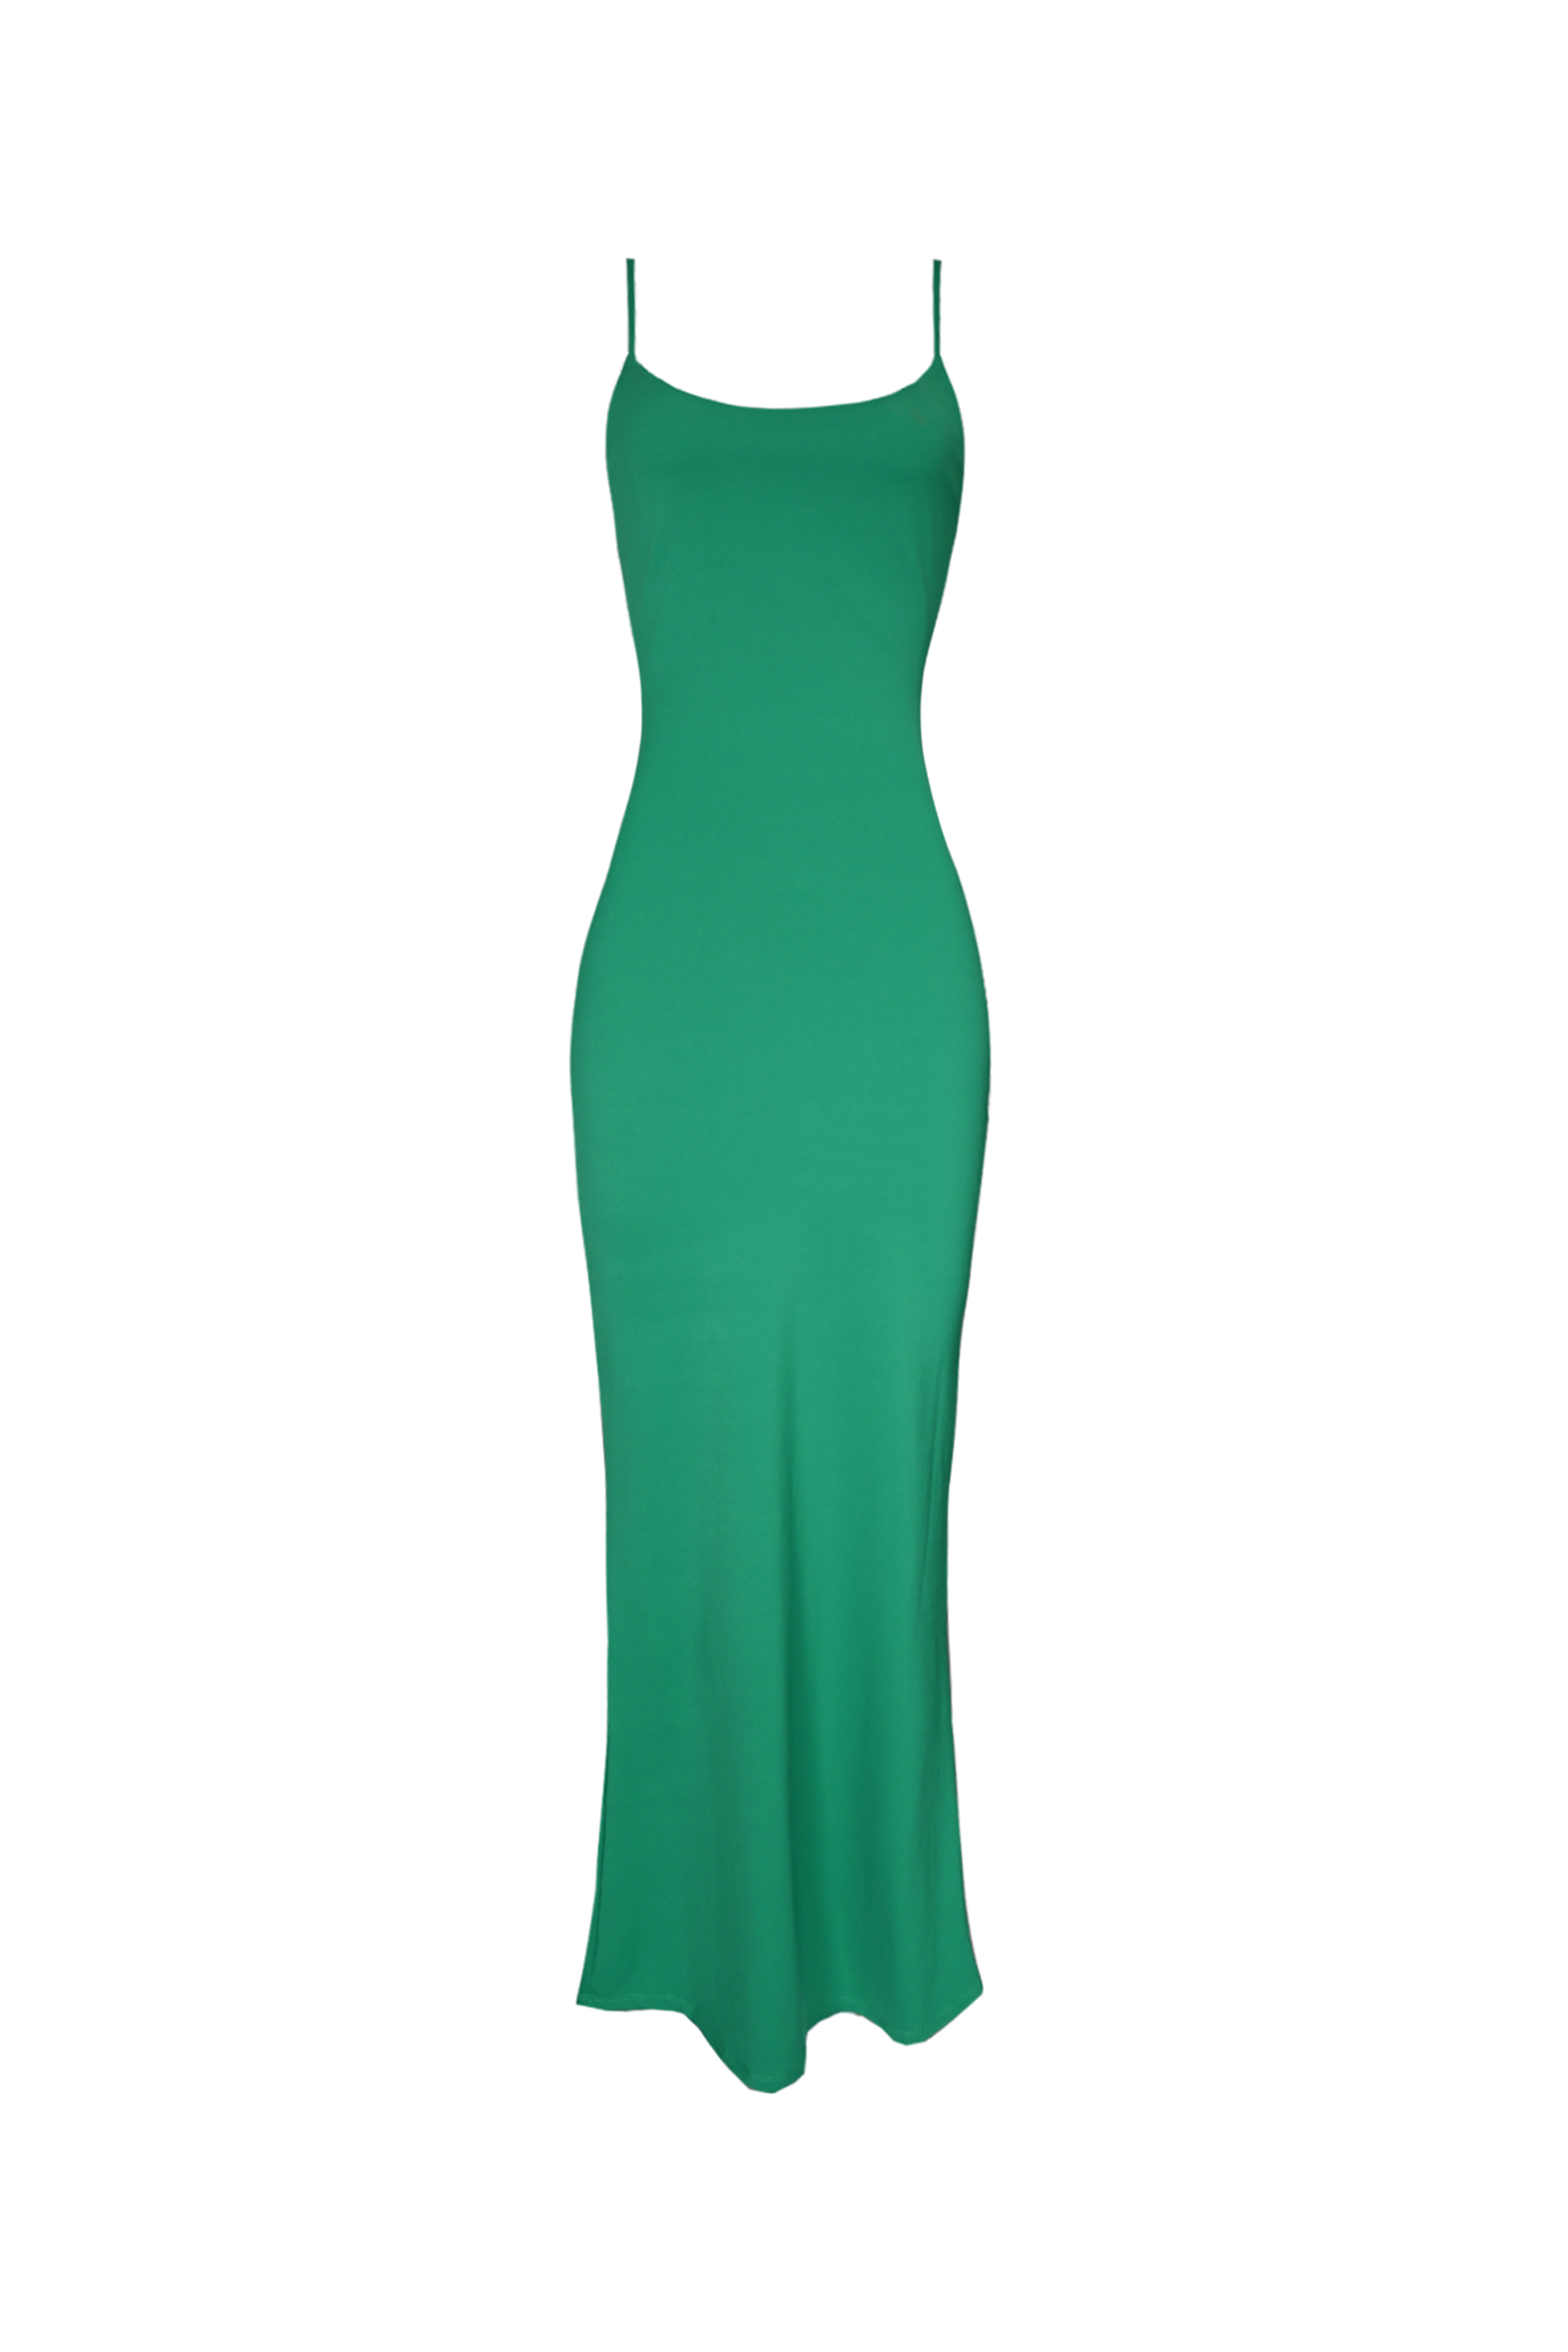 Nelia Green Dress